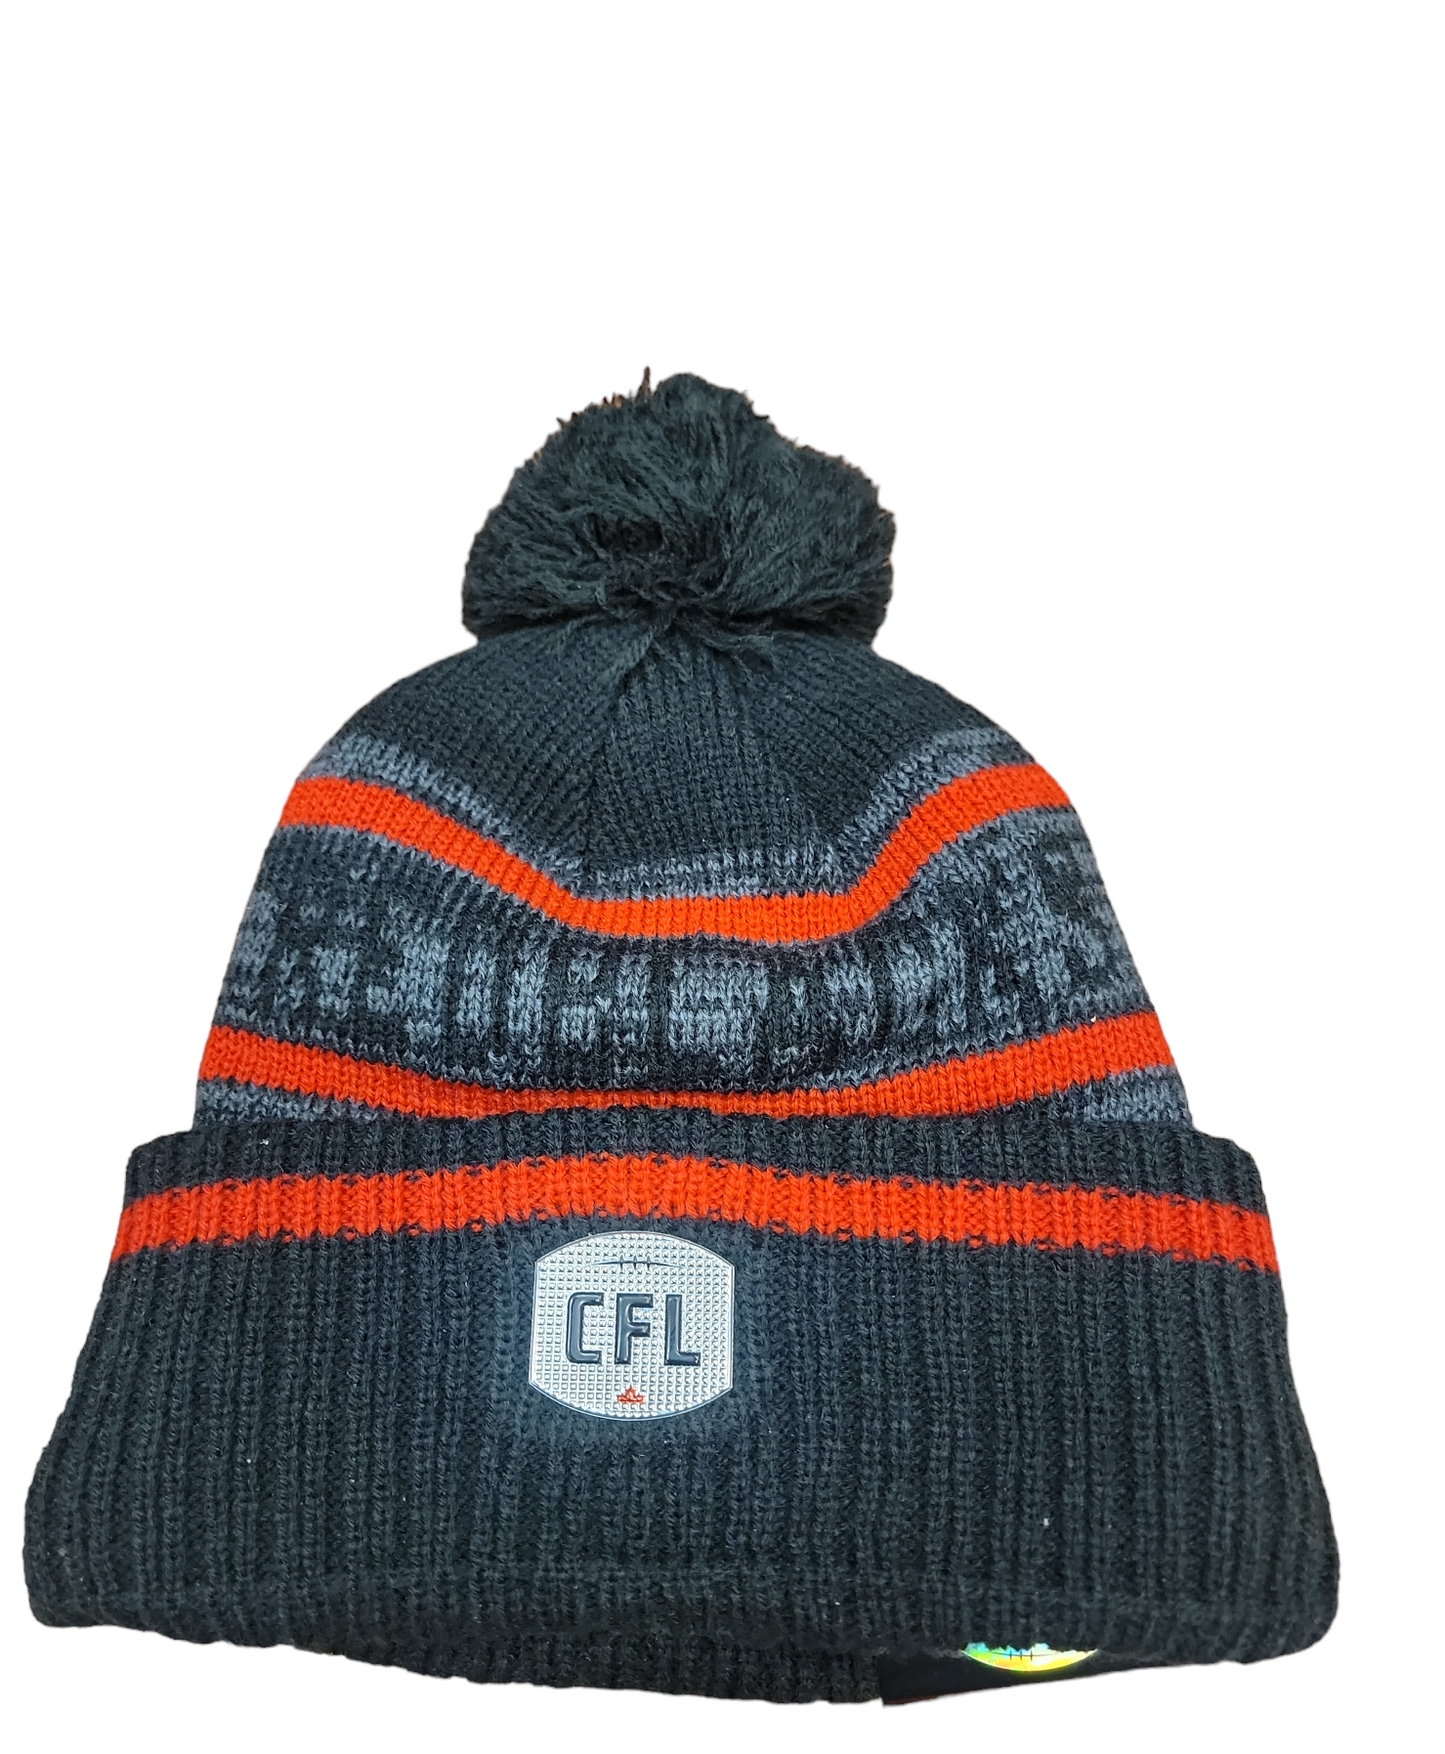 CFL Youth Knit Hat Sideline 2019 Redblacks